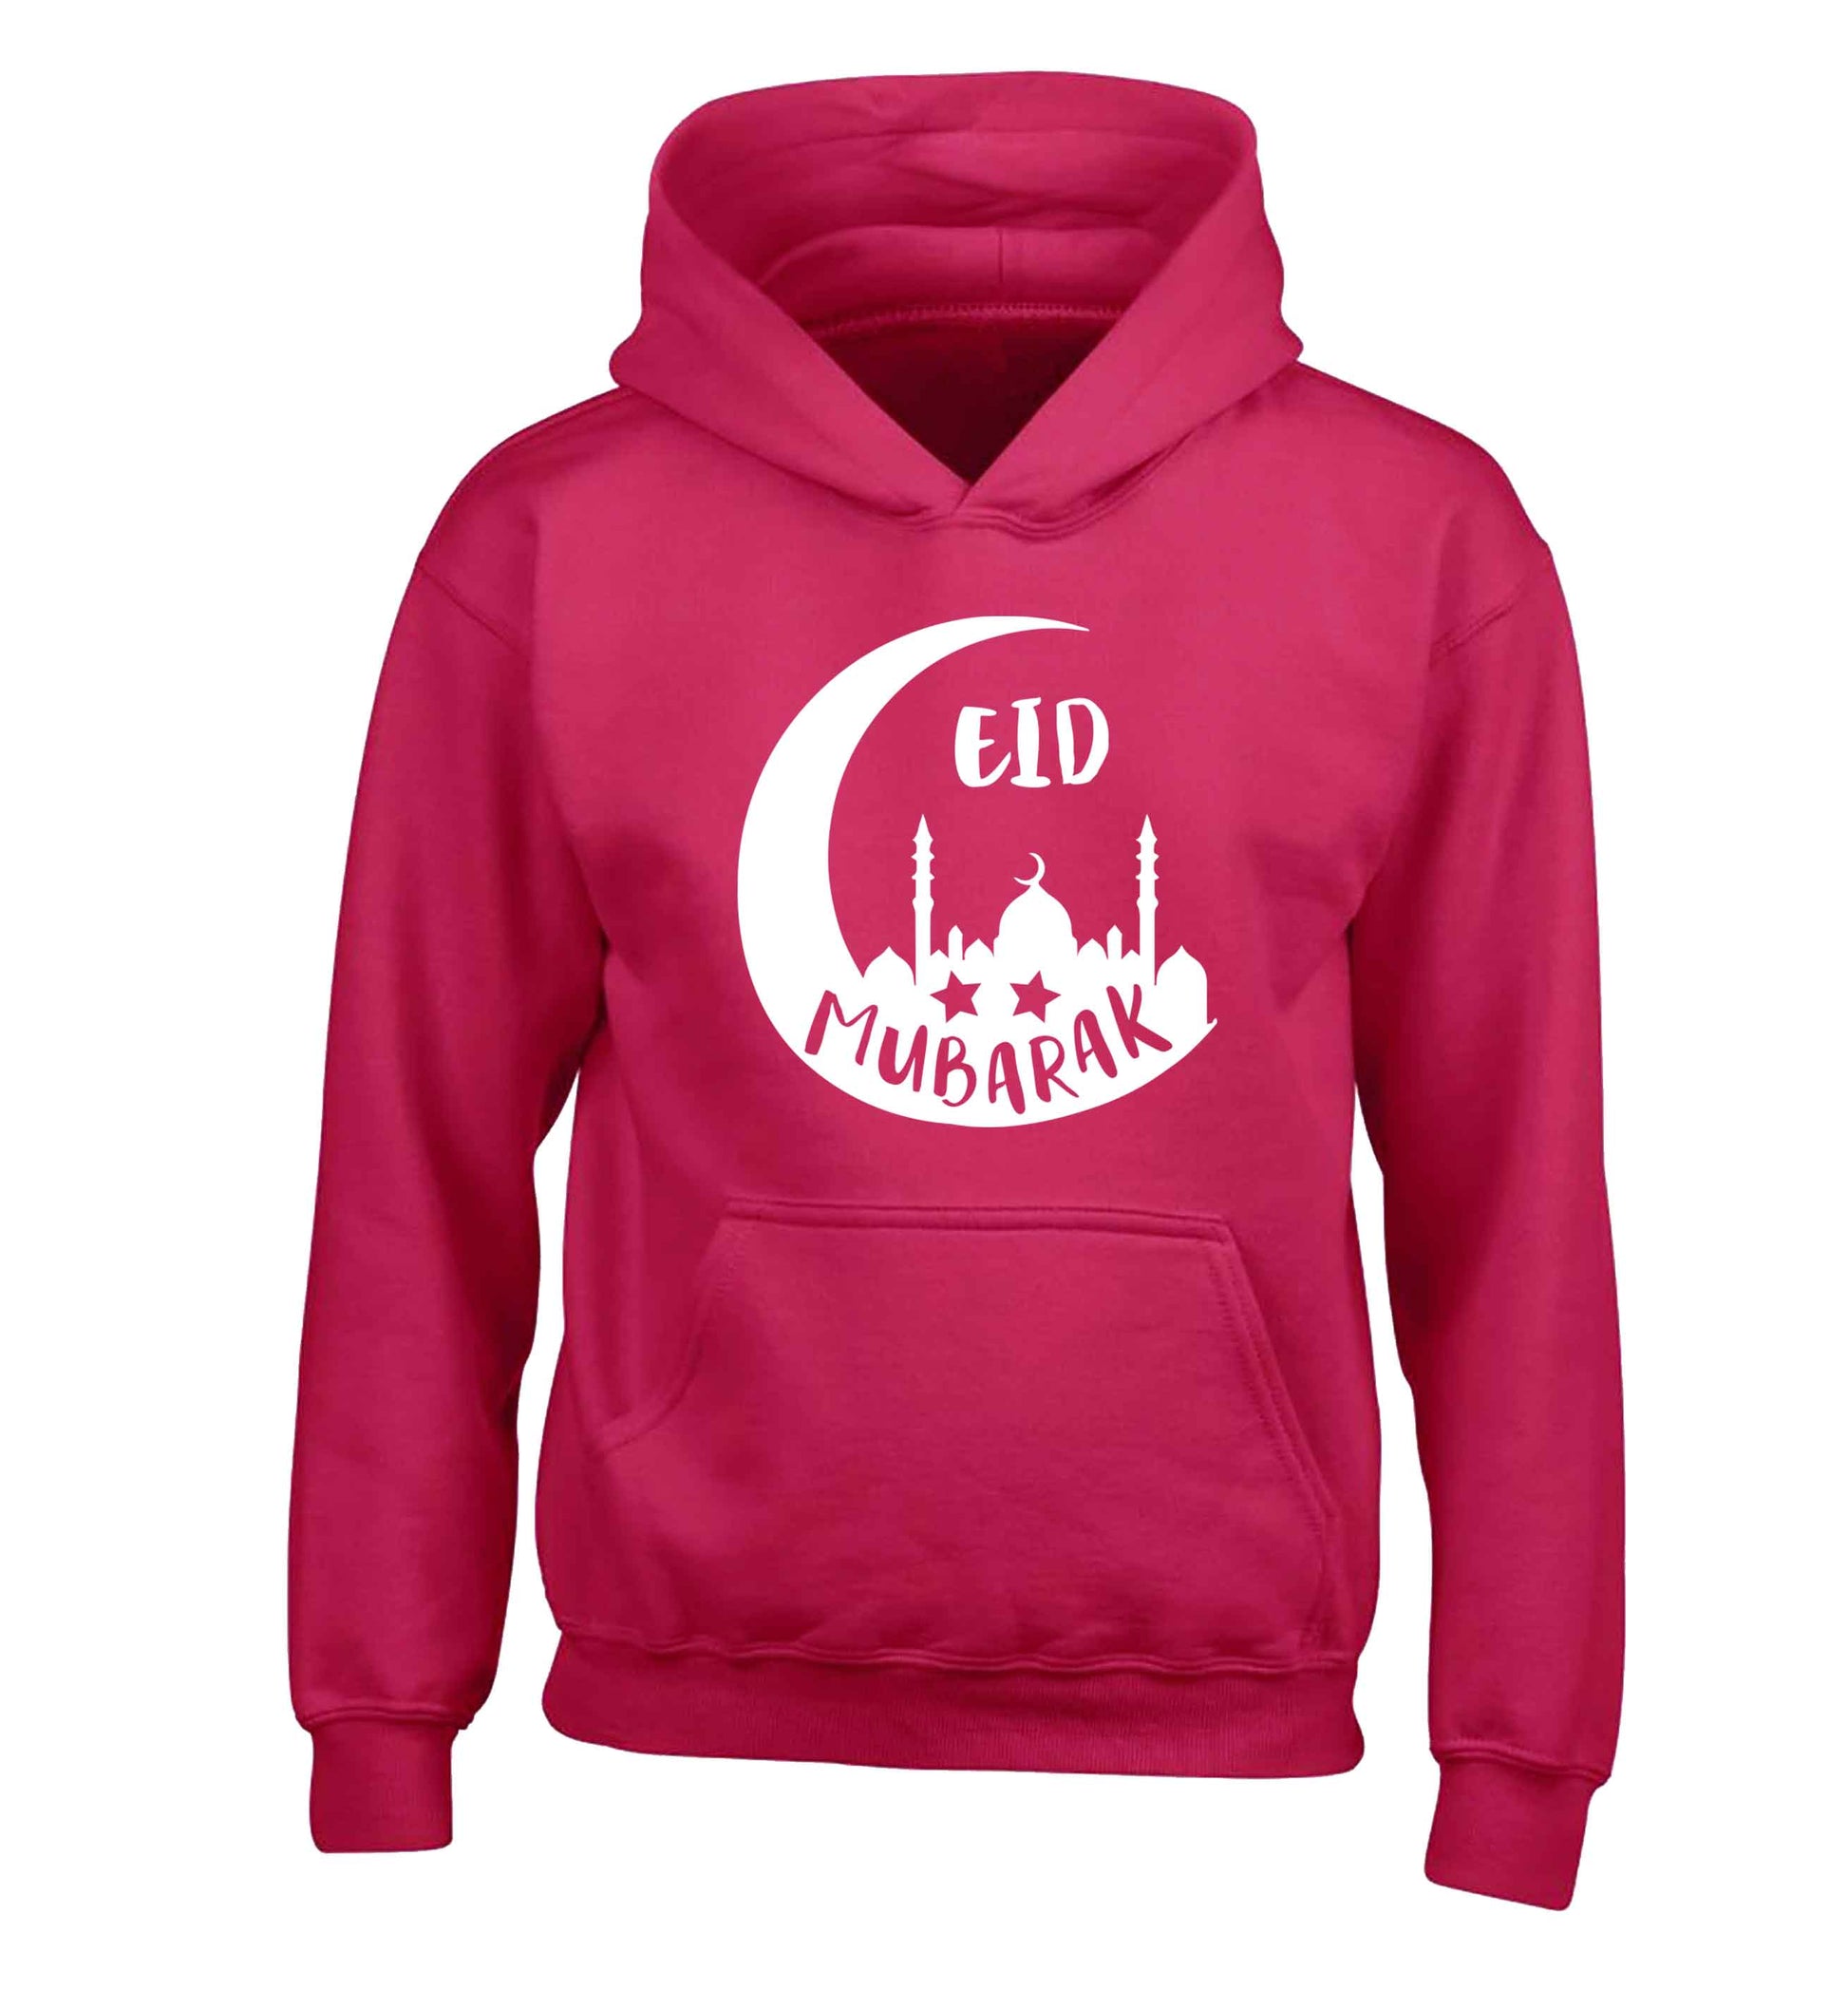 Eid mubarak children's pink hoodie 12-13 Years